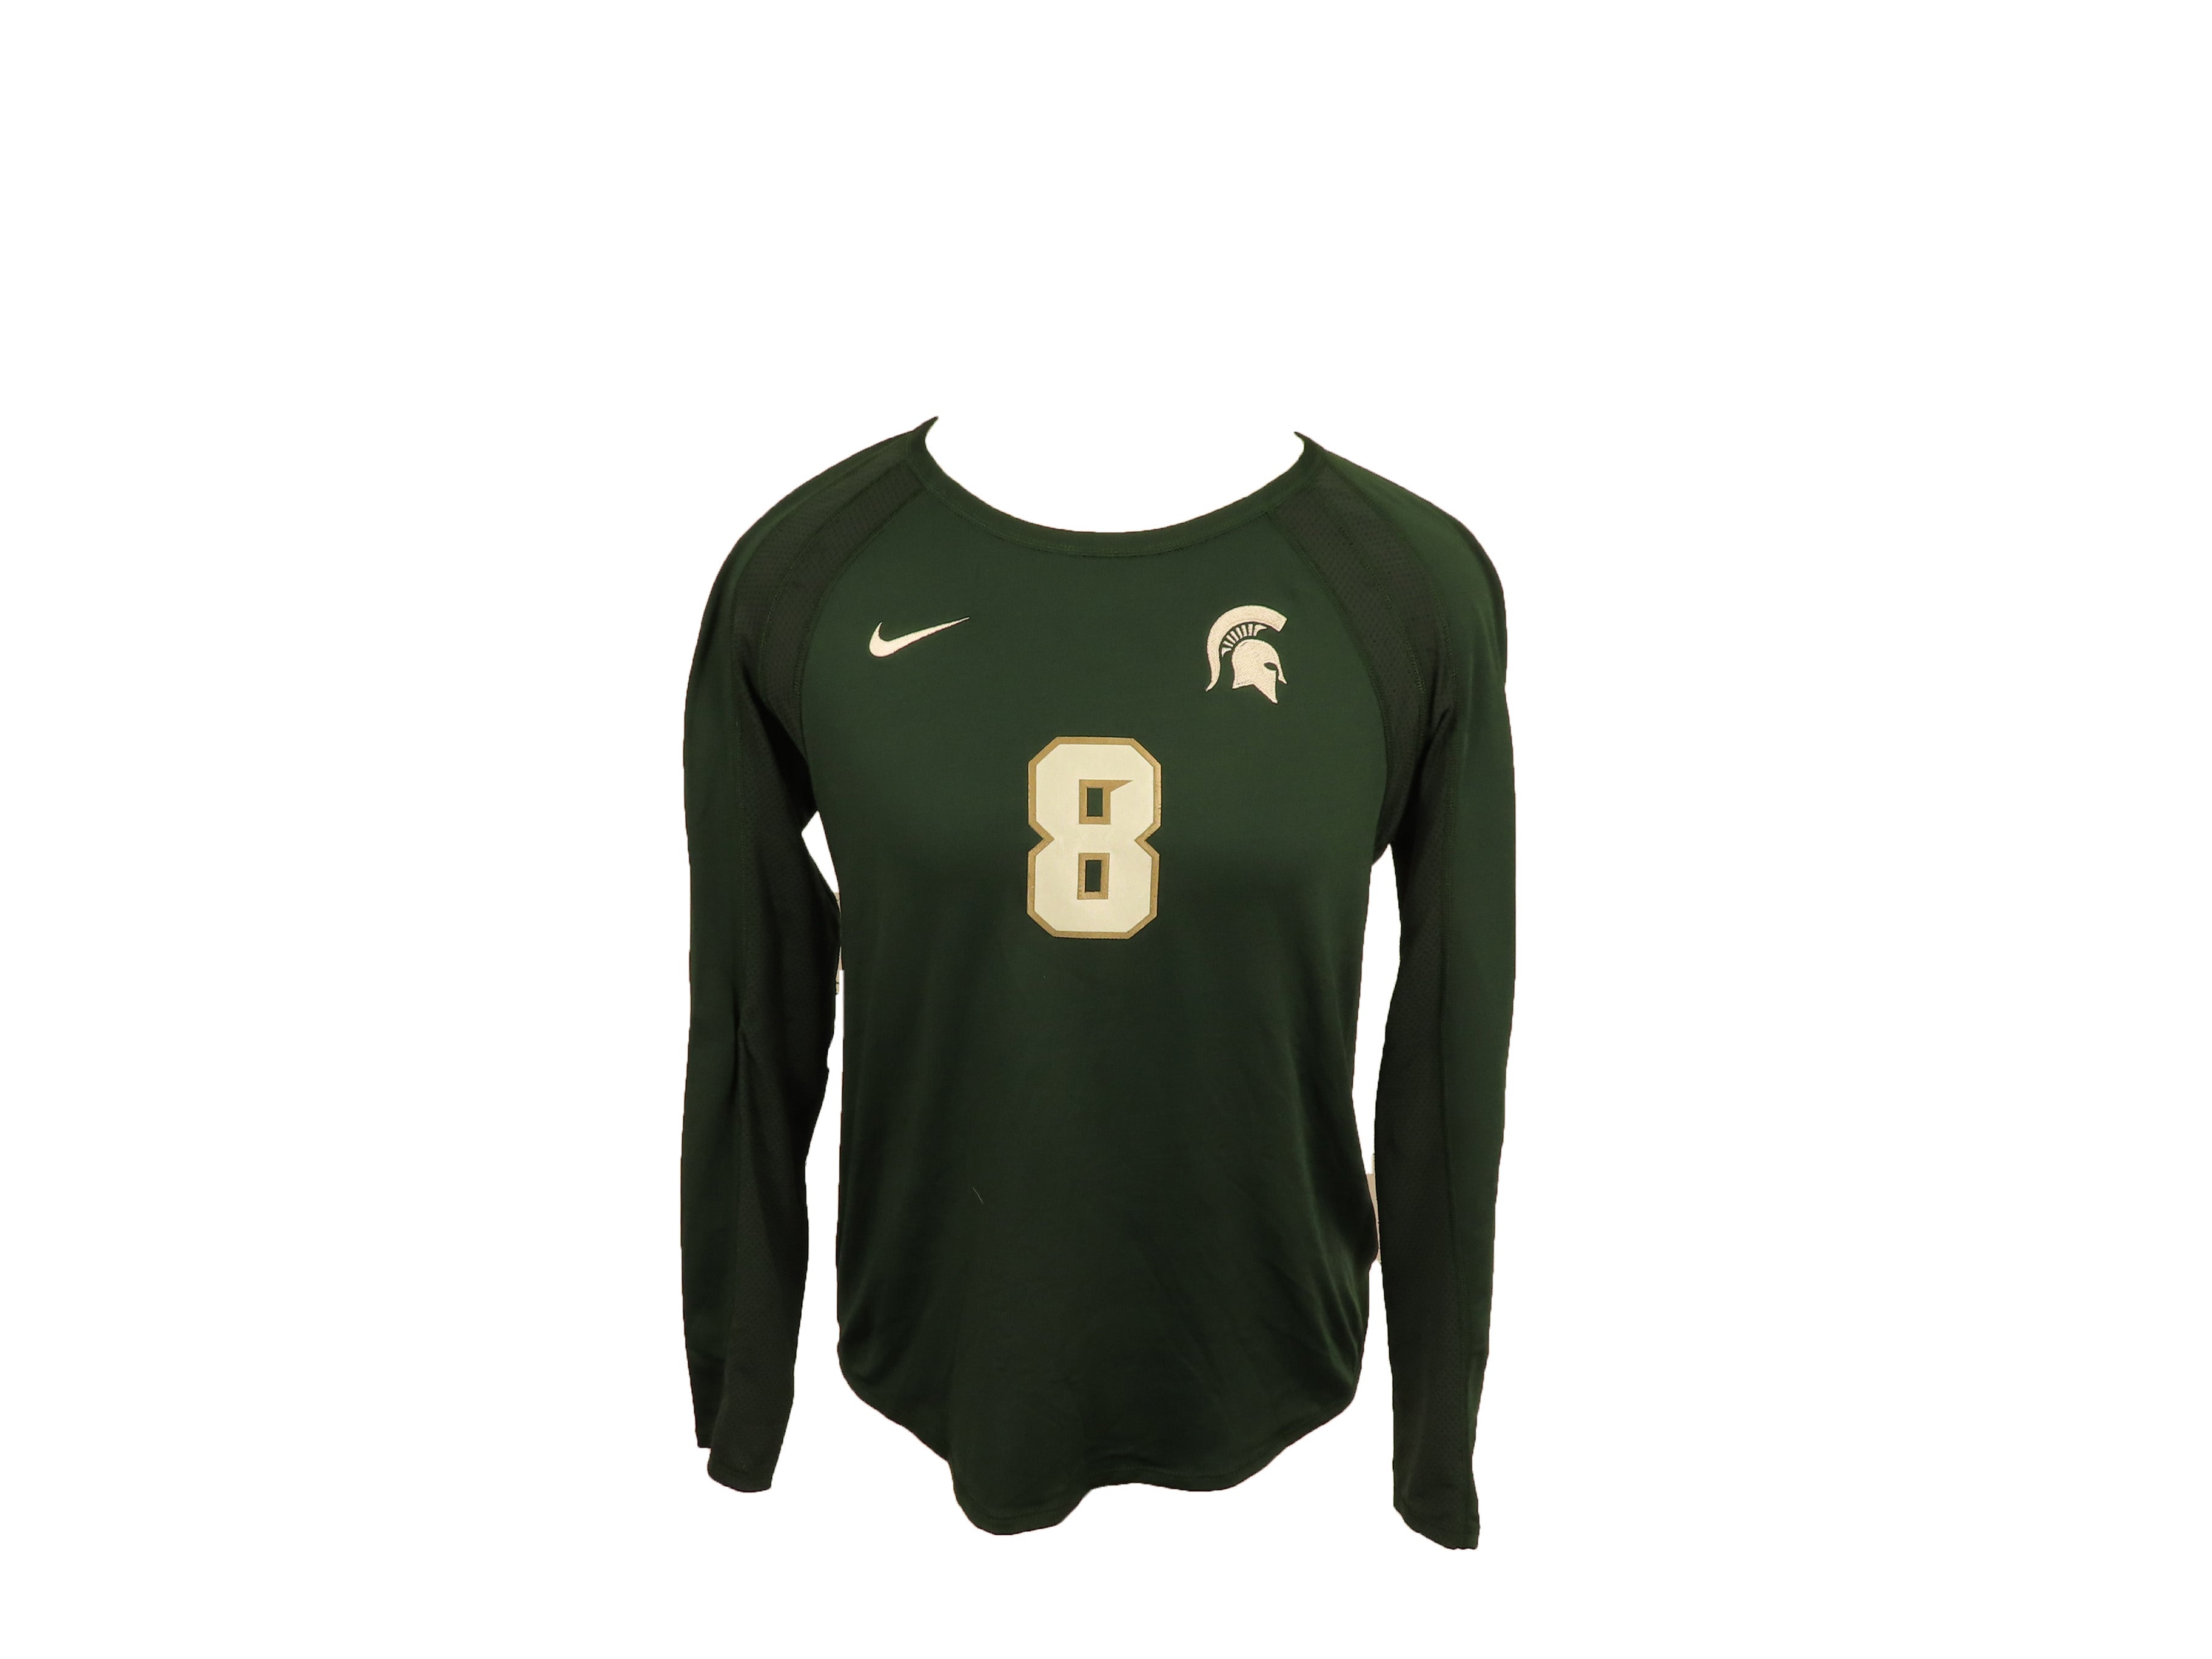 Nike Green Long Sleeve MSU Volleyball #8 Jersey Women's Size L